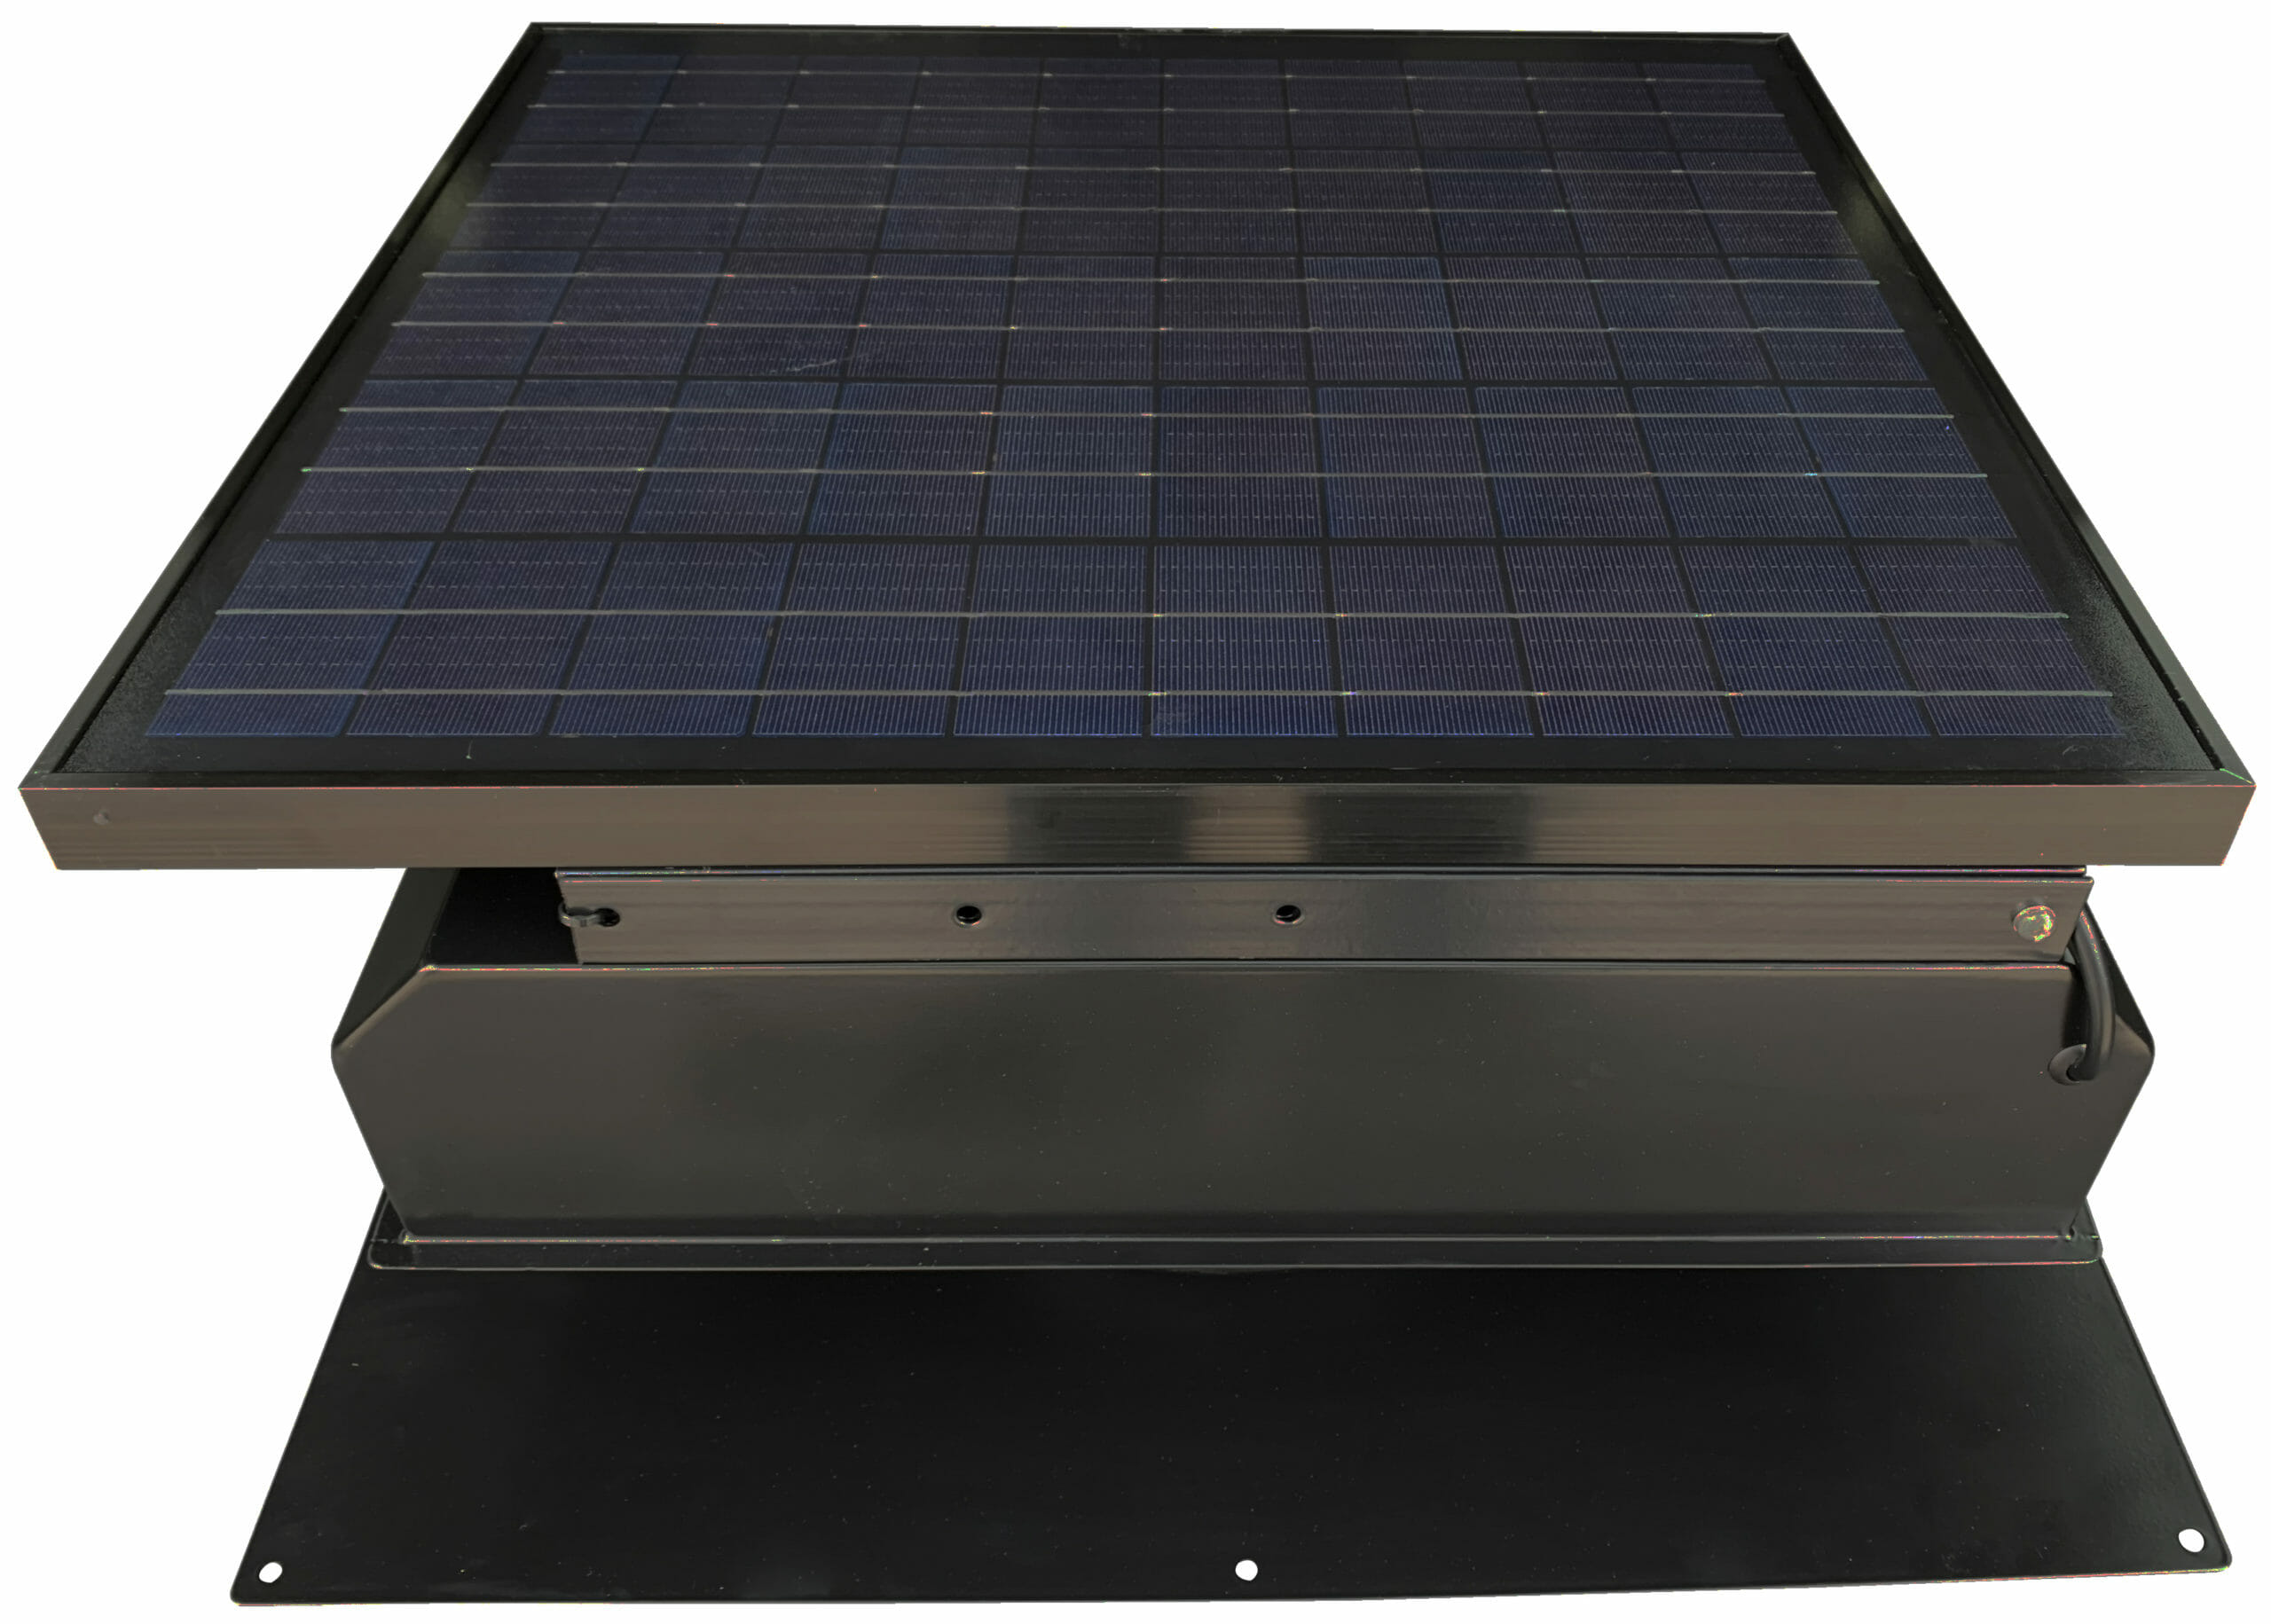 Thermostatic Solar Roof Ventilation Fan, Solar attic fan, Solar Whirlybirds  - Solar Water Heater